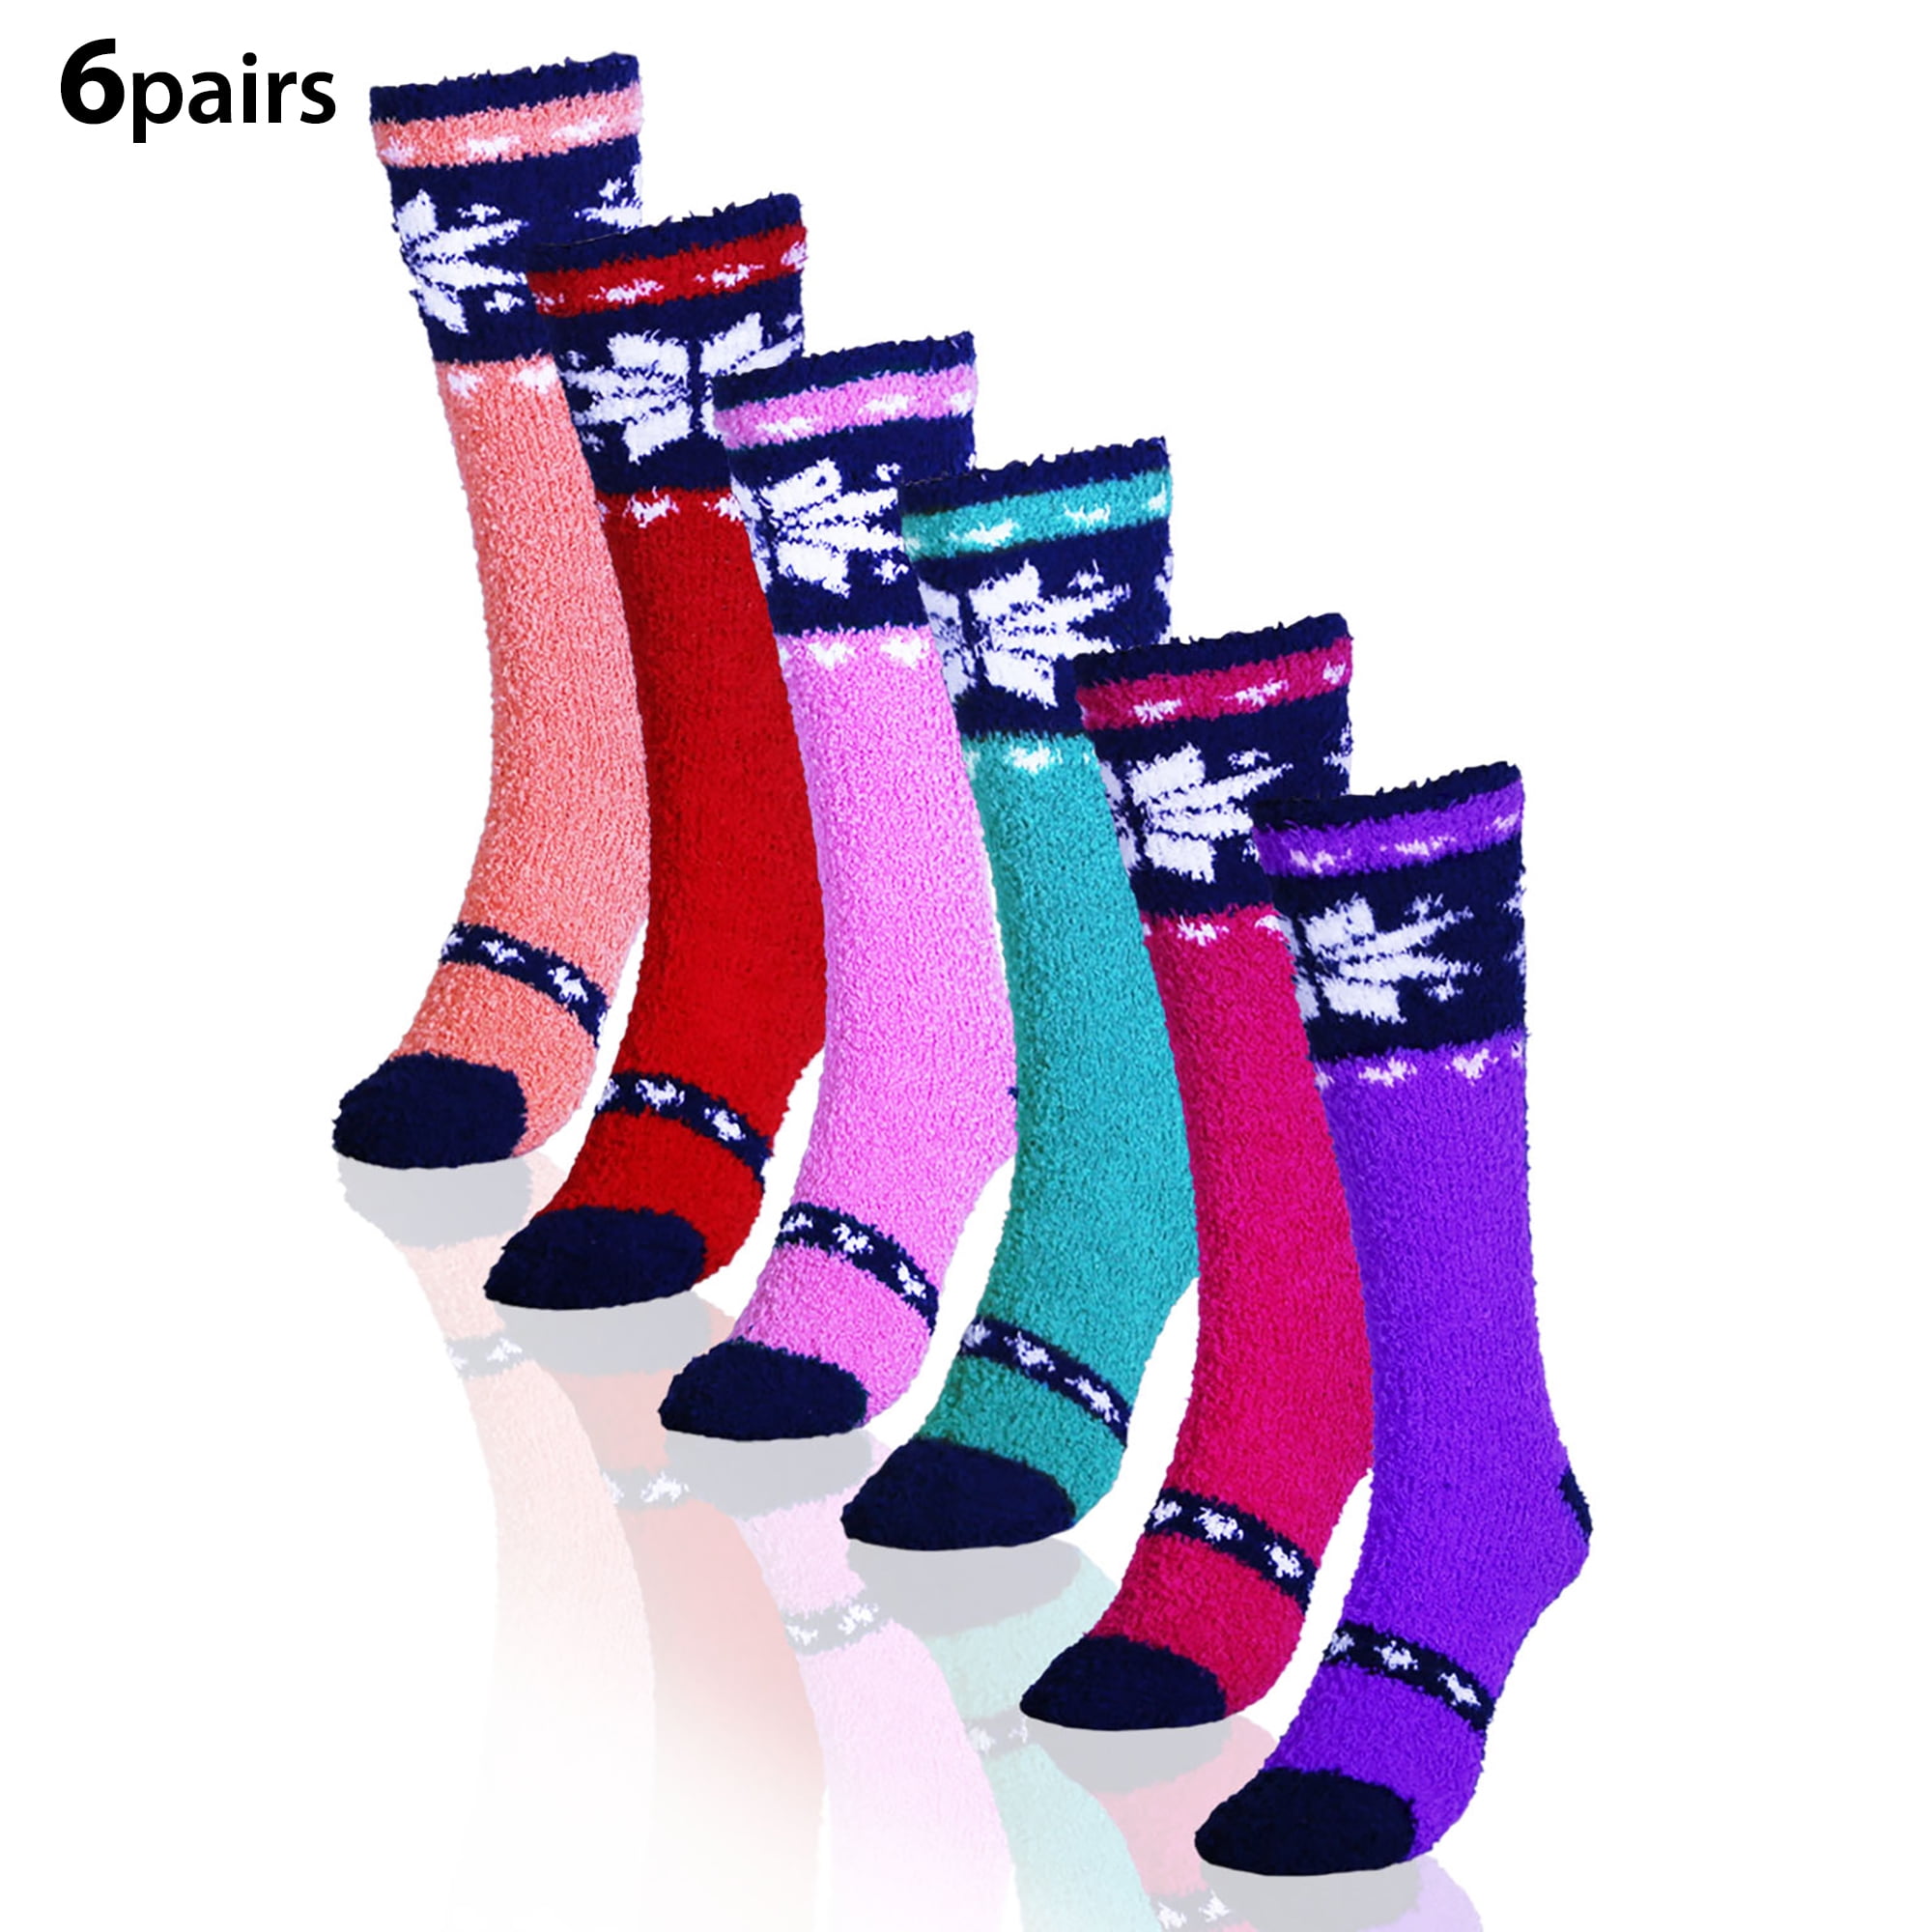 Details about   Ladies Slipper Socks Girls Non Slip Thermal Warm Lounge Home Socks Gift Idea lot